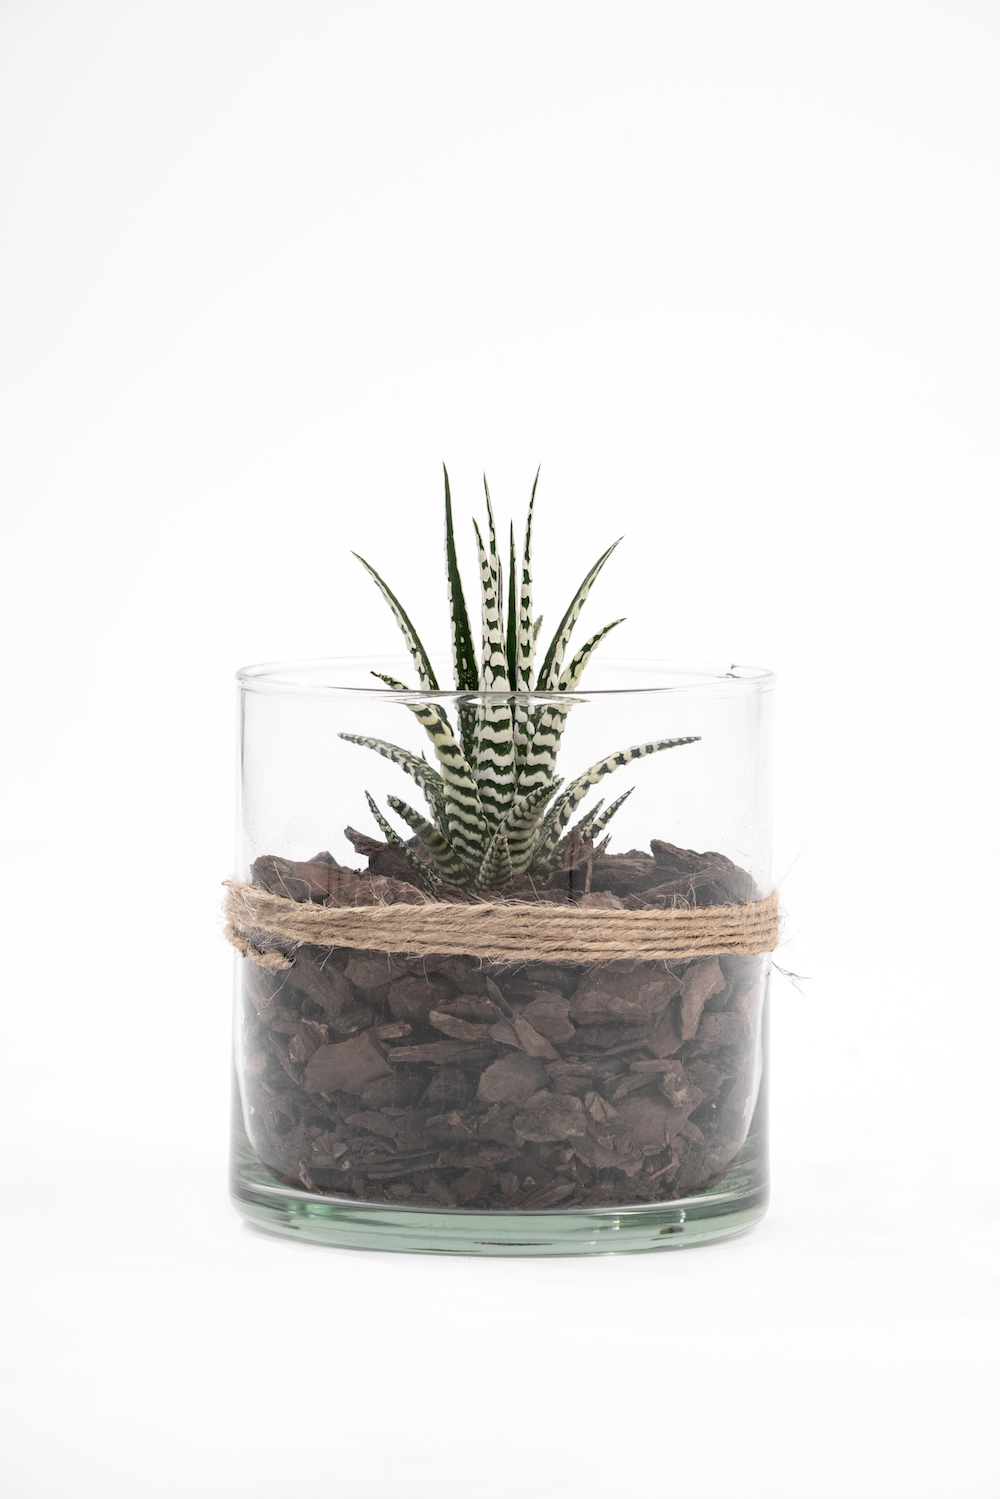 Pianta grassa in vaso vetro - Acquista online su Decoflowers Andria